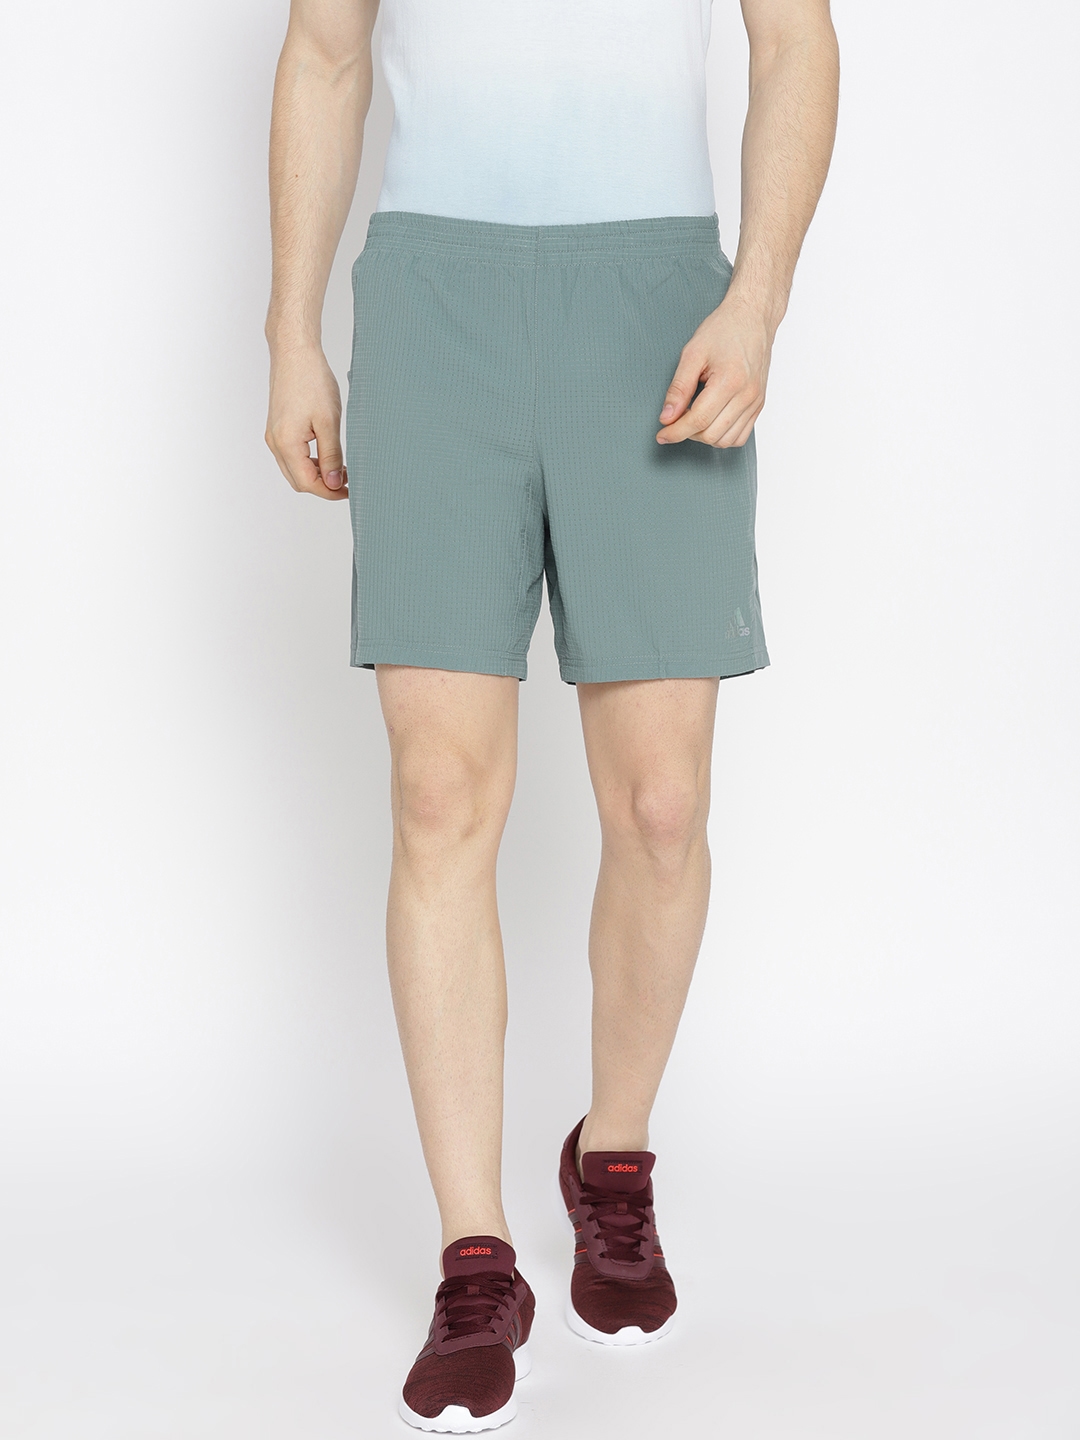 adidas mint green shorts